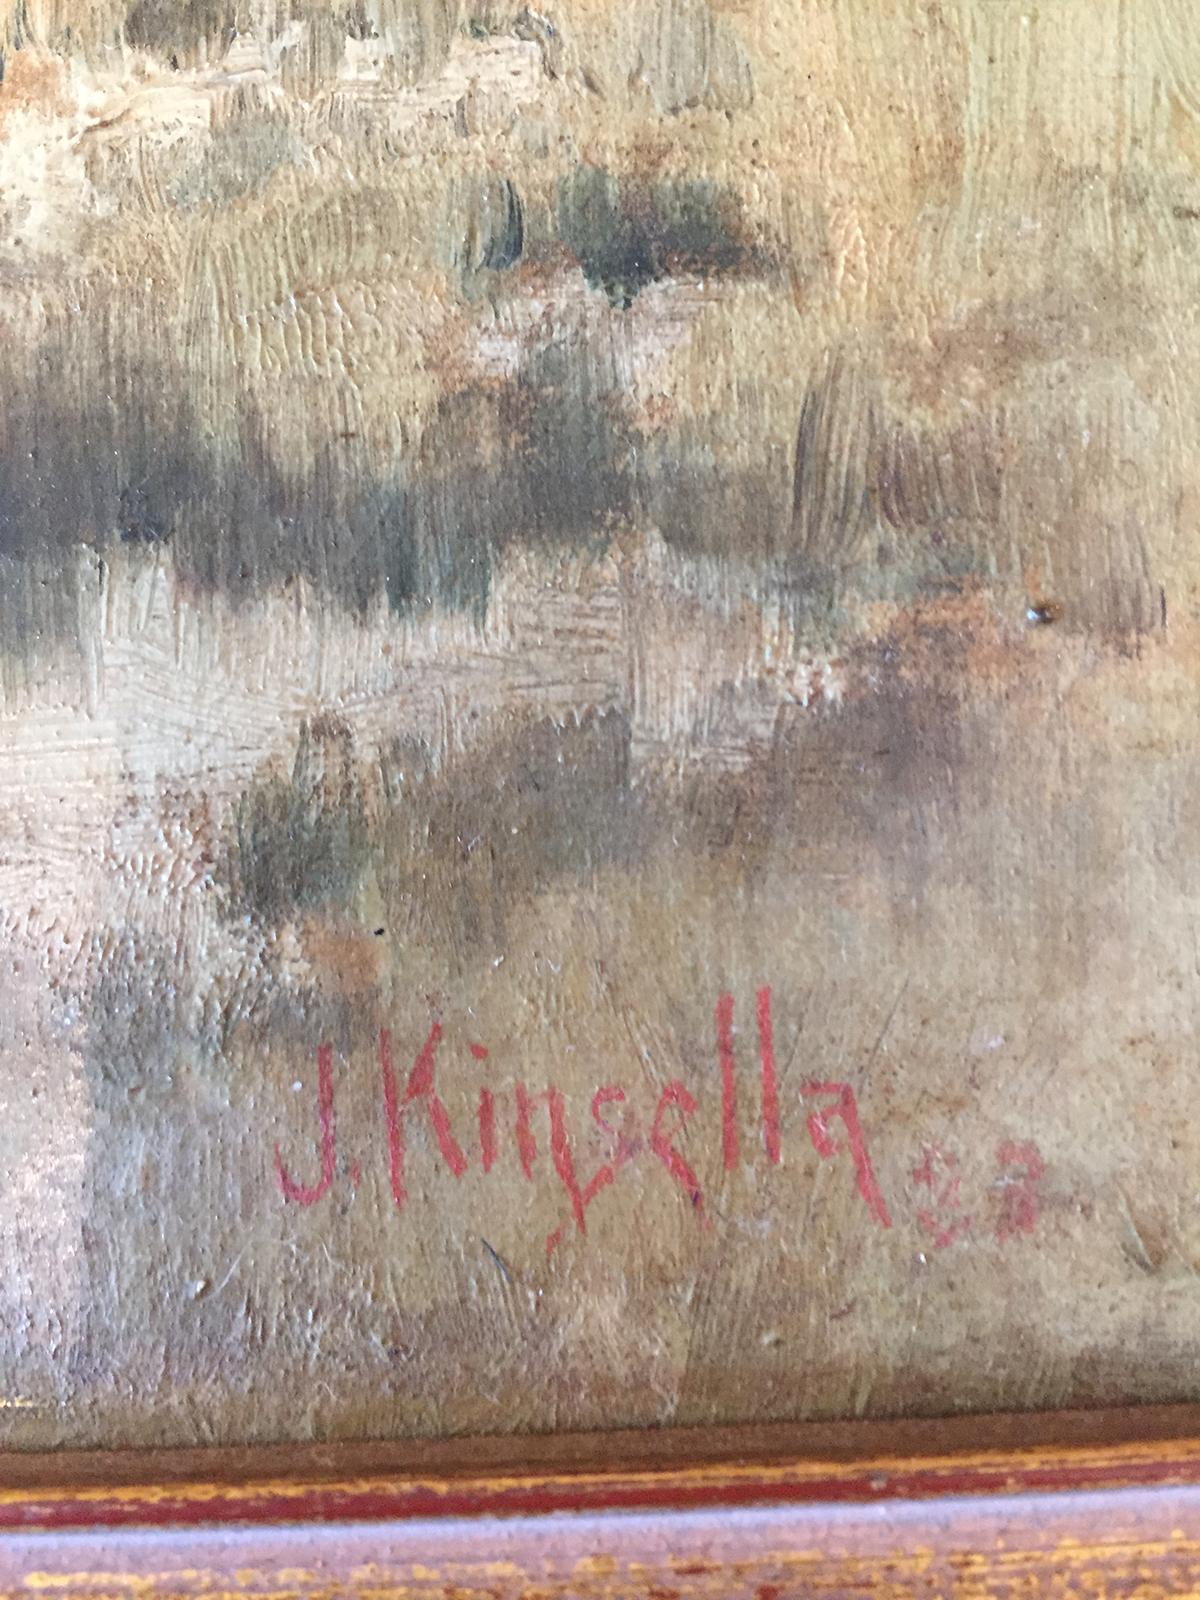 20th century Marsh painting by James Kinsella.